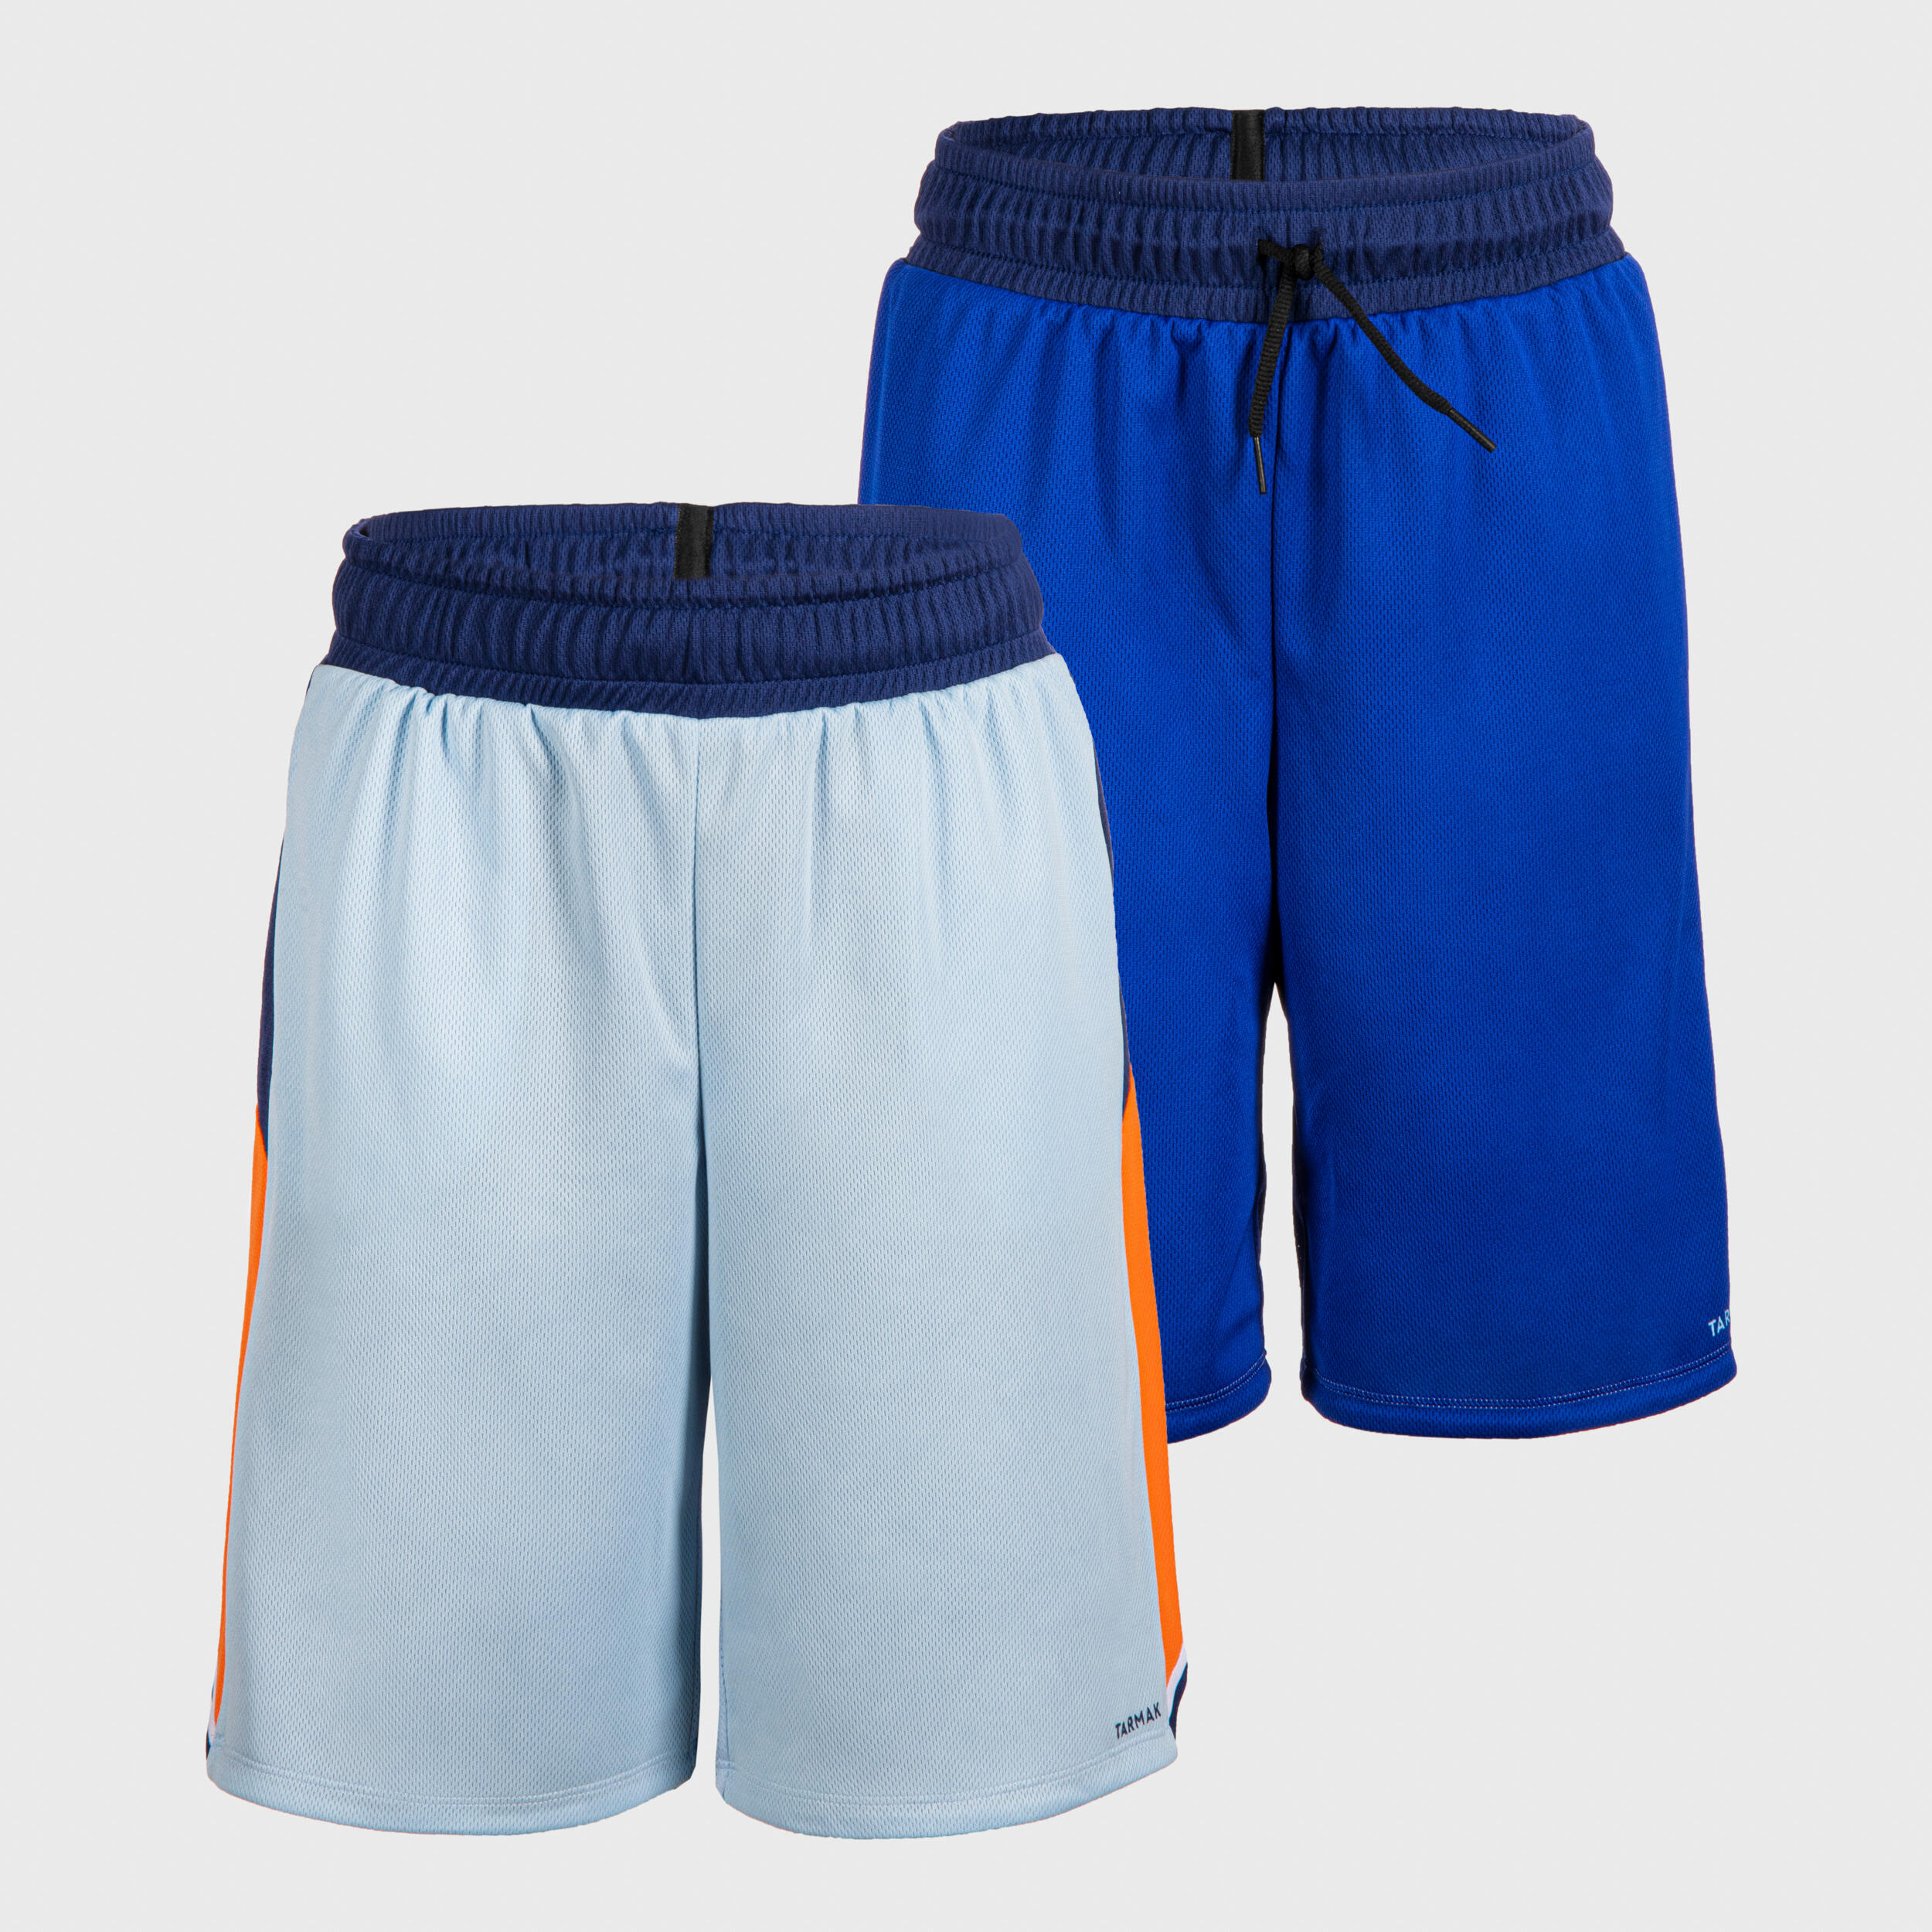 Kids' Reversible Basketball Shorts SH500R - Light Blue/Navy 3/11